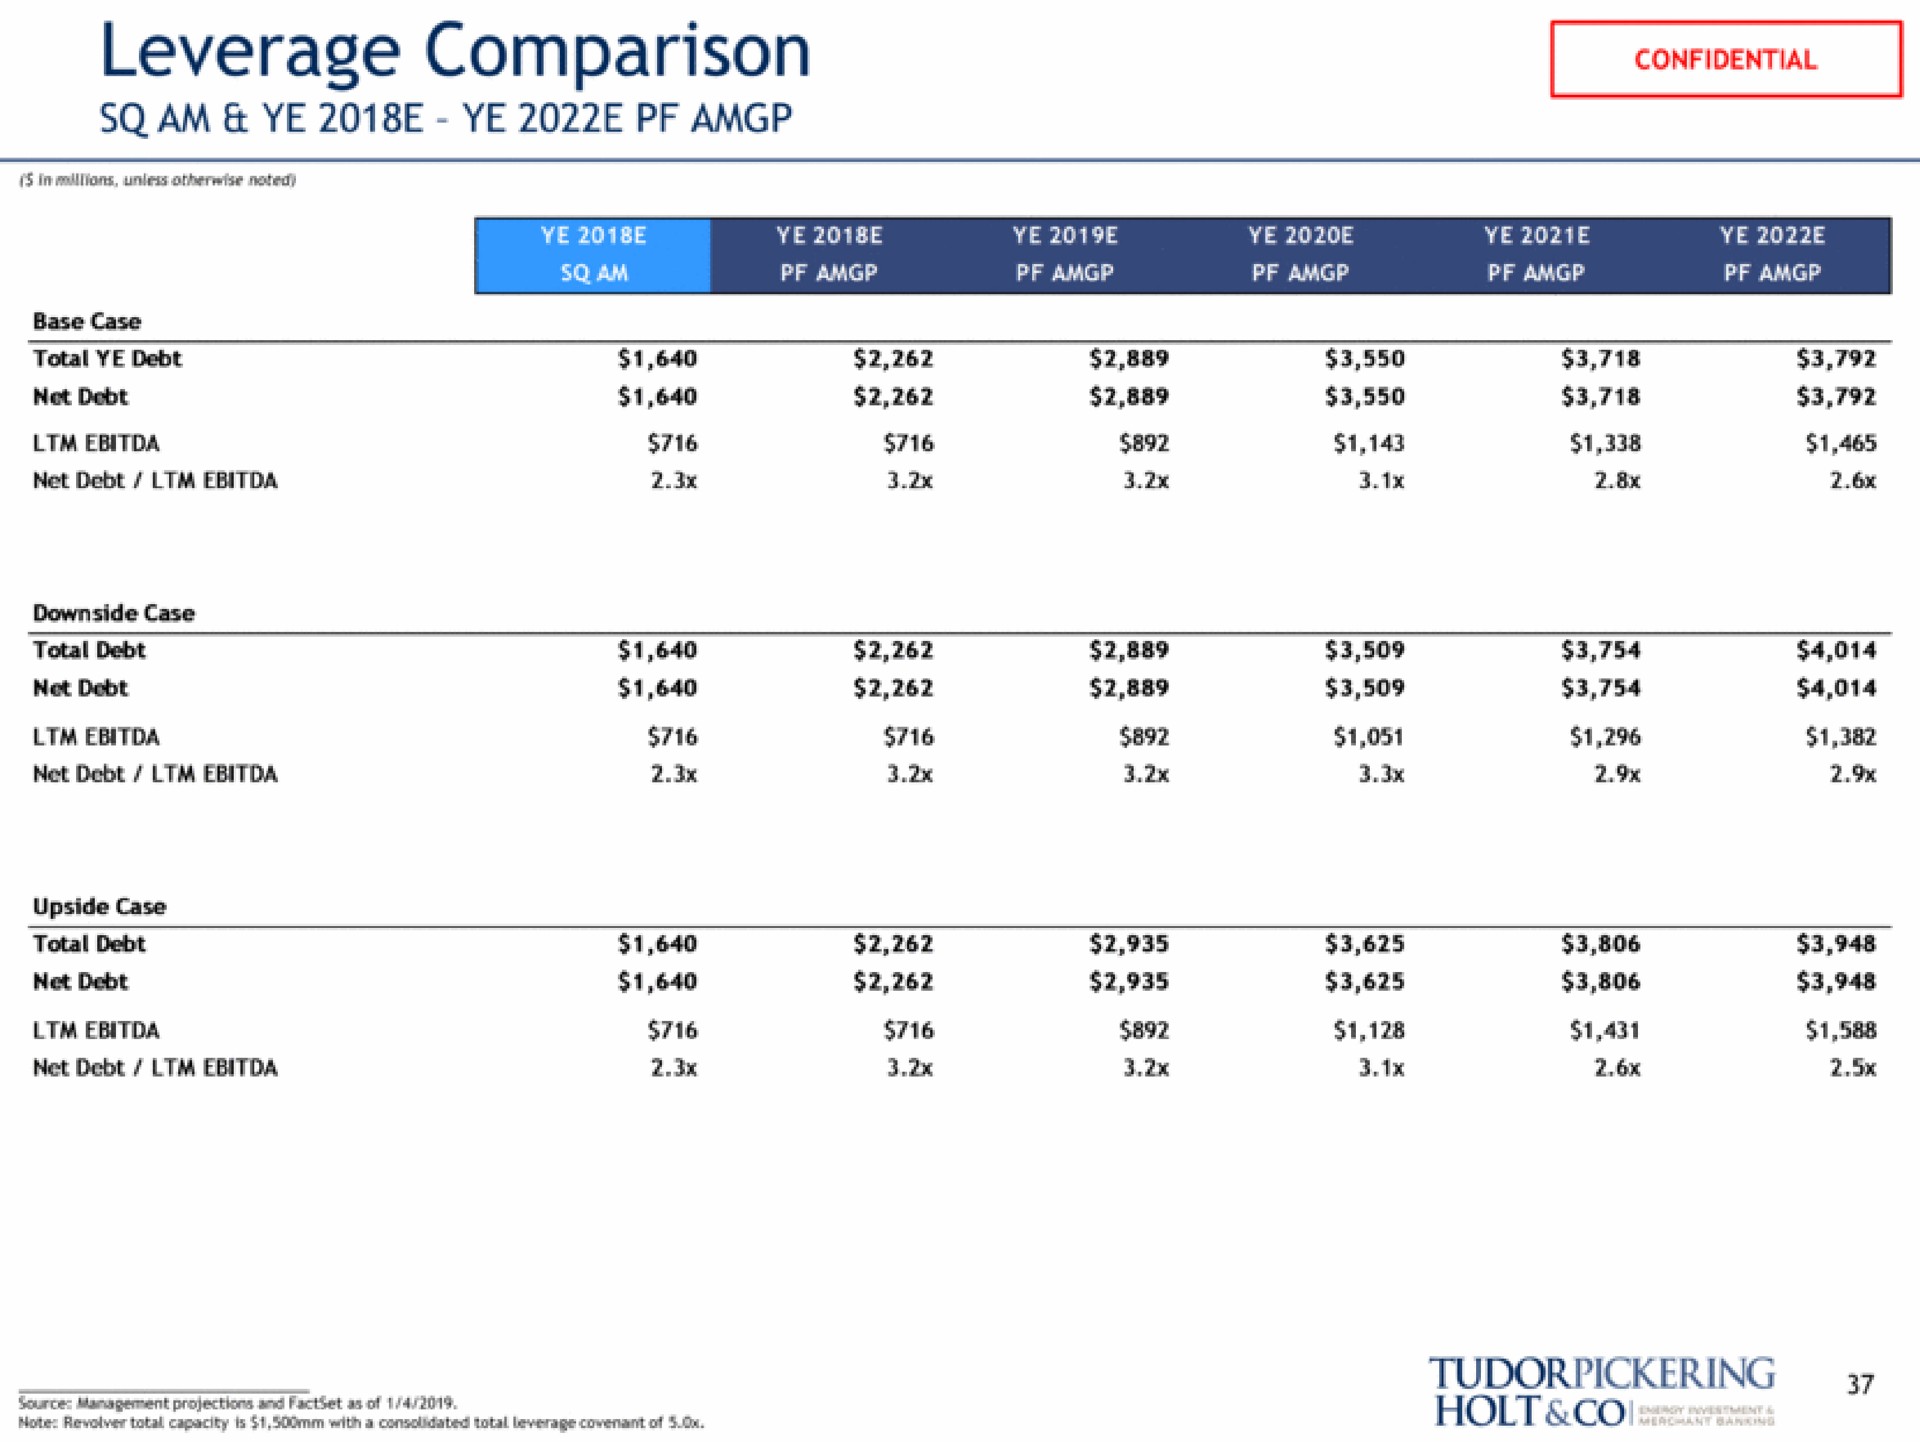 leverage comparison am | Tudor, Pickering, Holt & Co